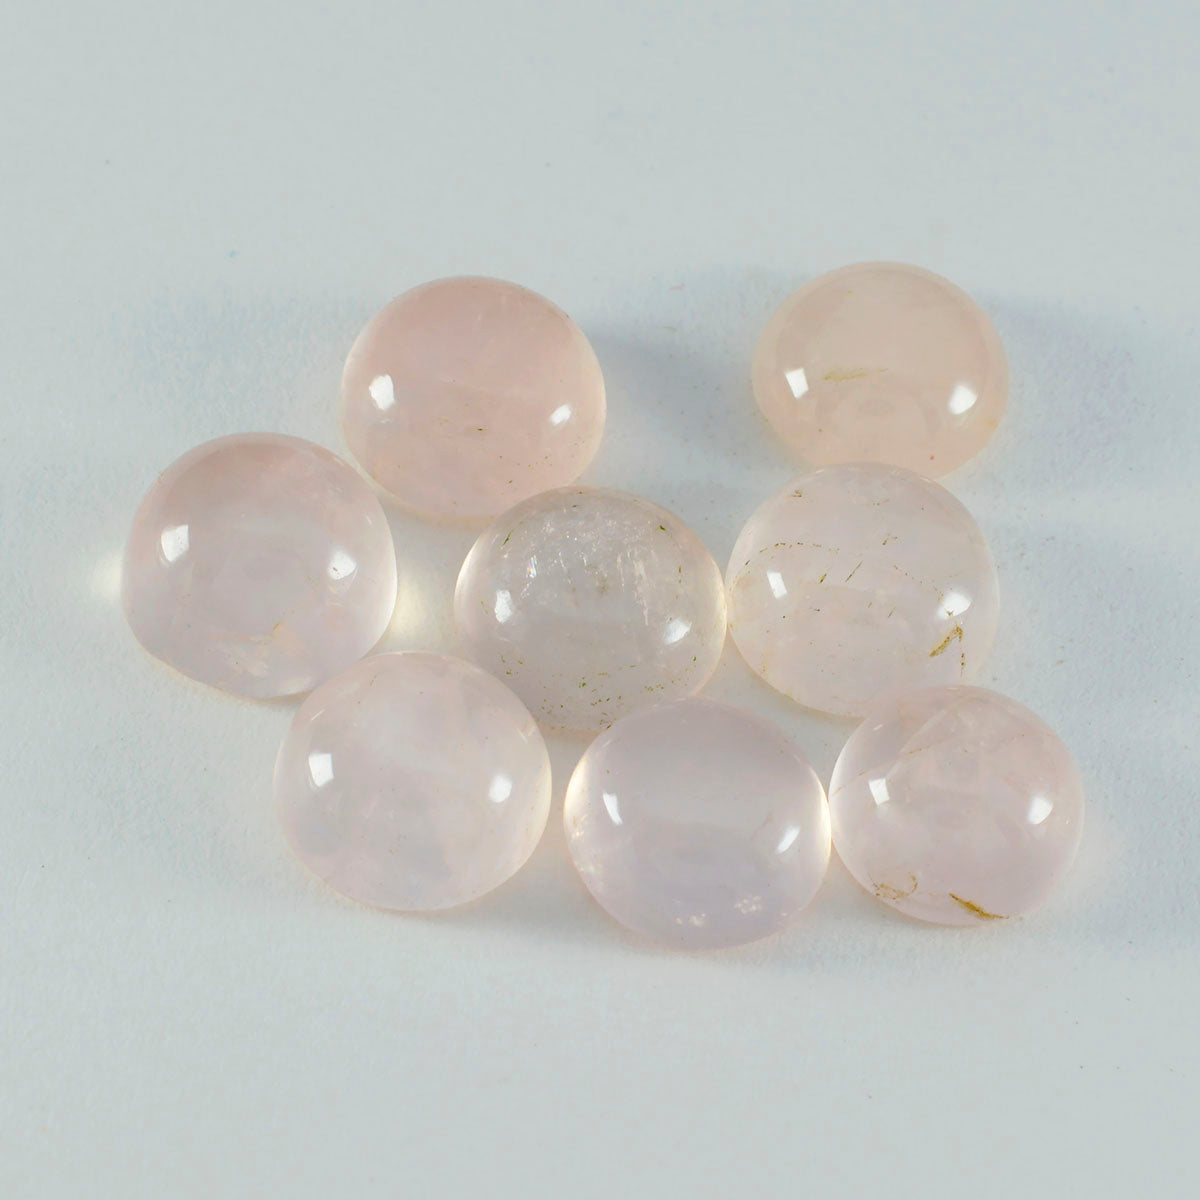 riyogems 1 шт. кабошон из розового кварца 12x12 мм круглой формы, красивый качественный драгоценный камень